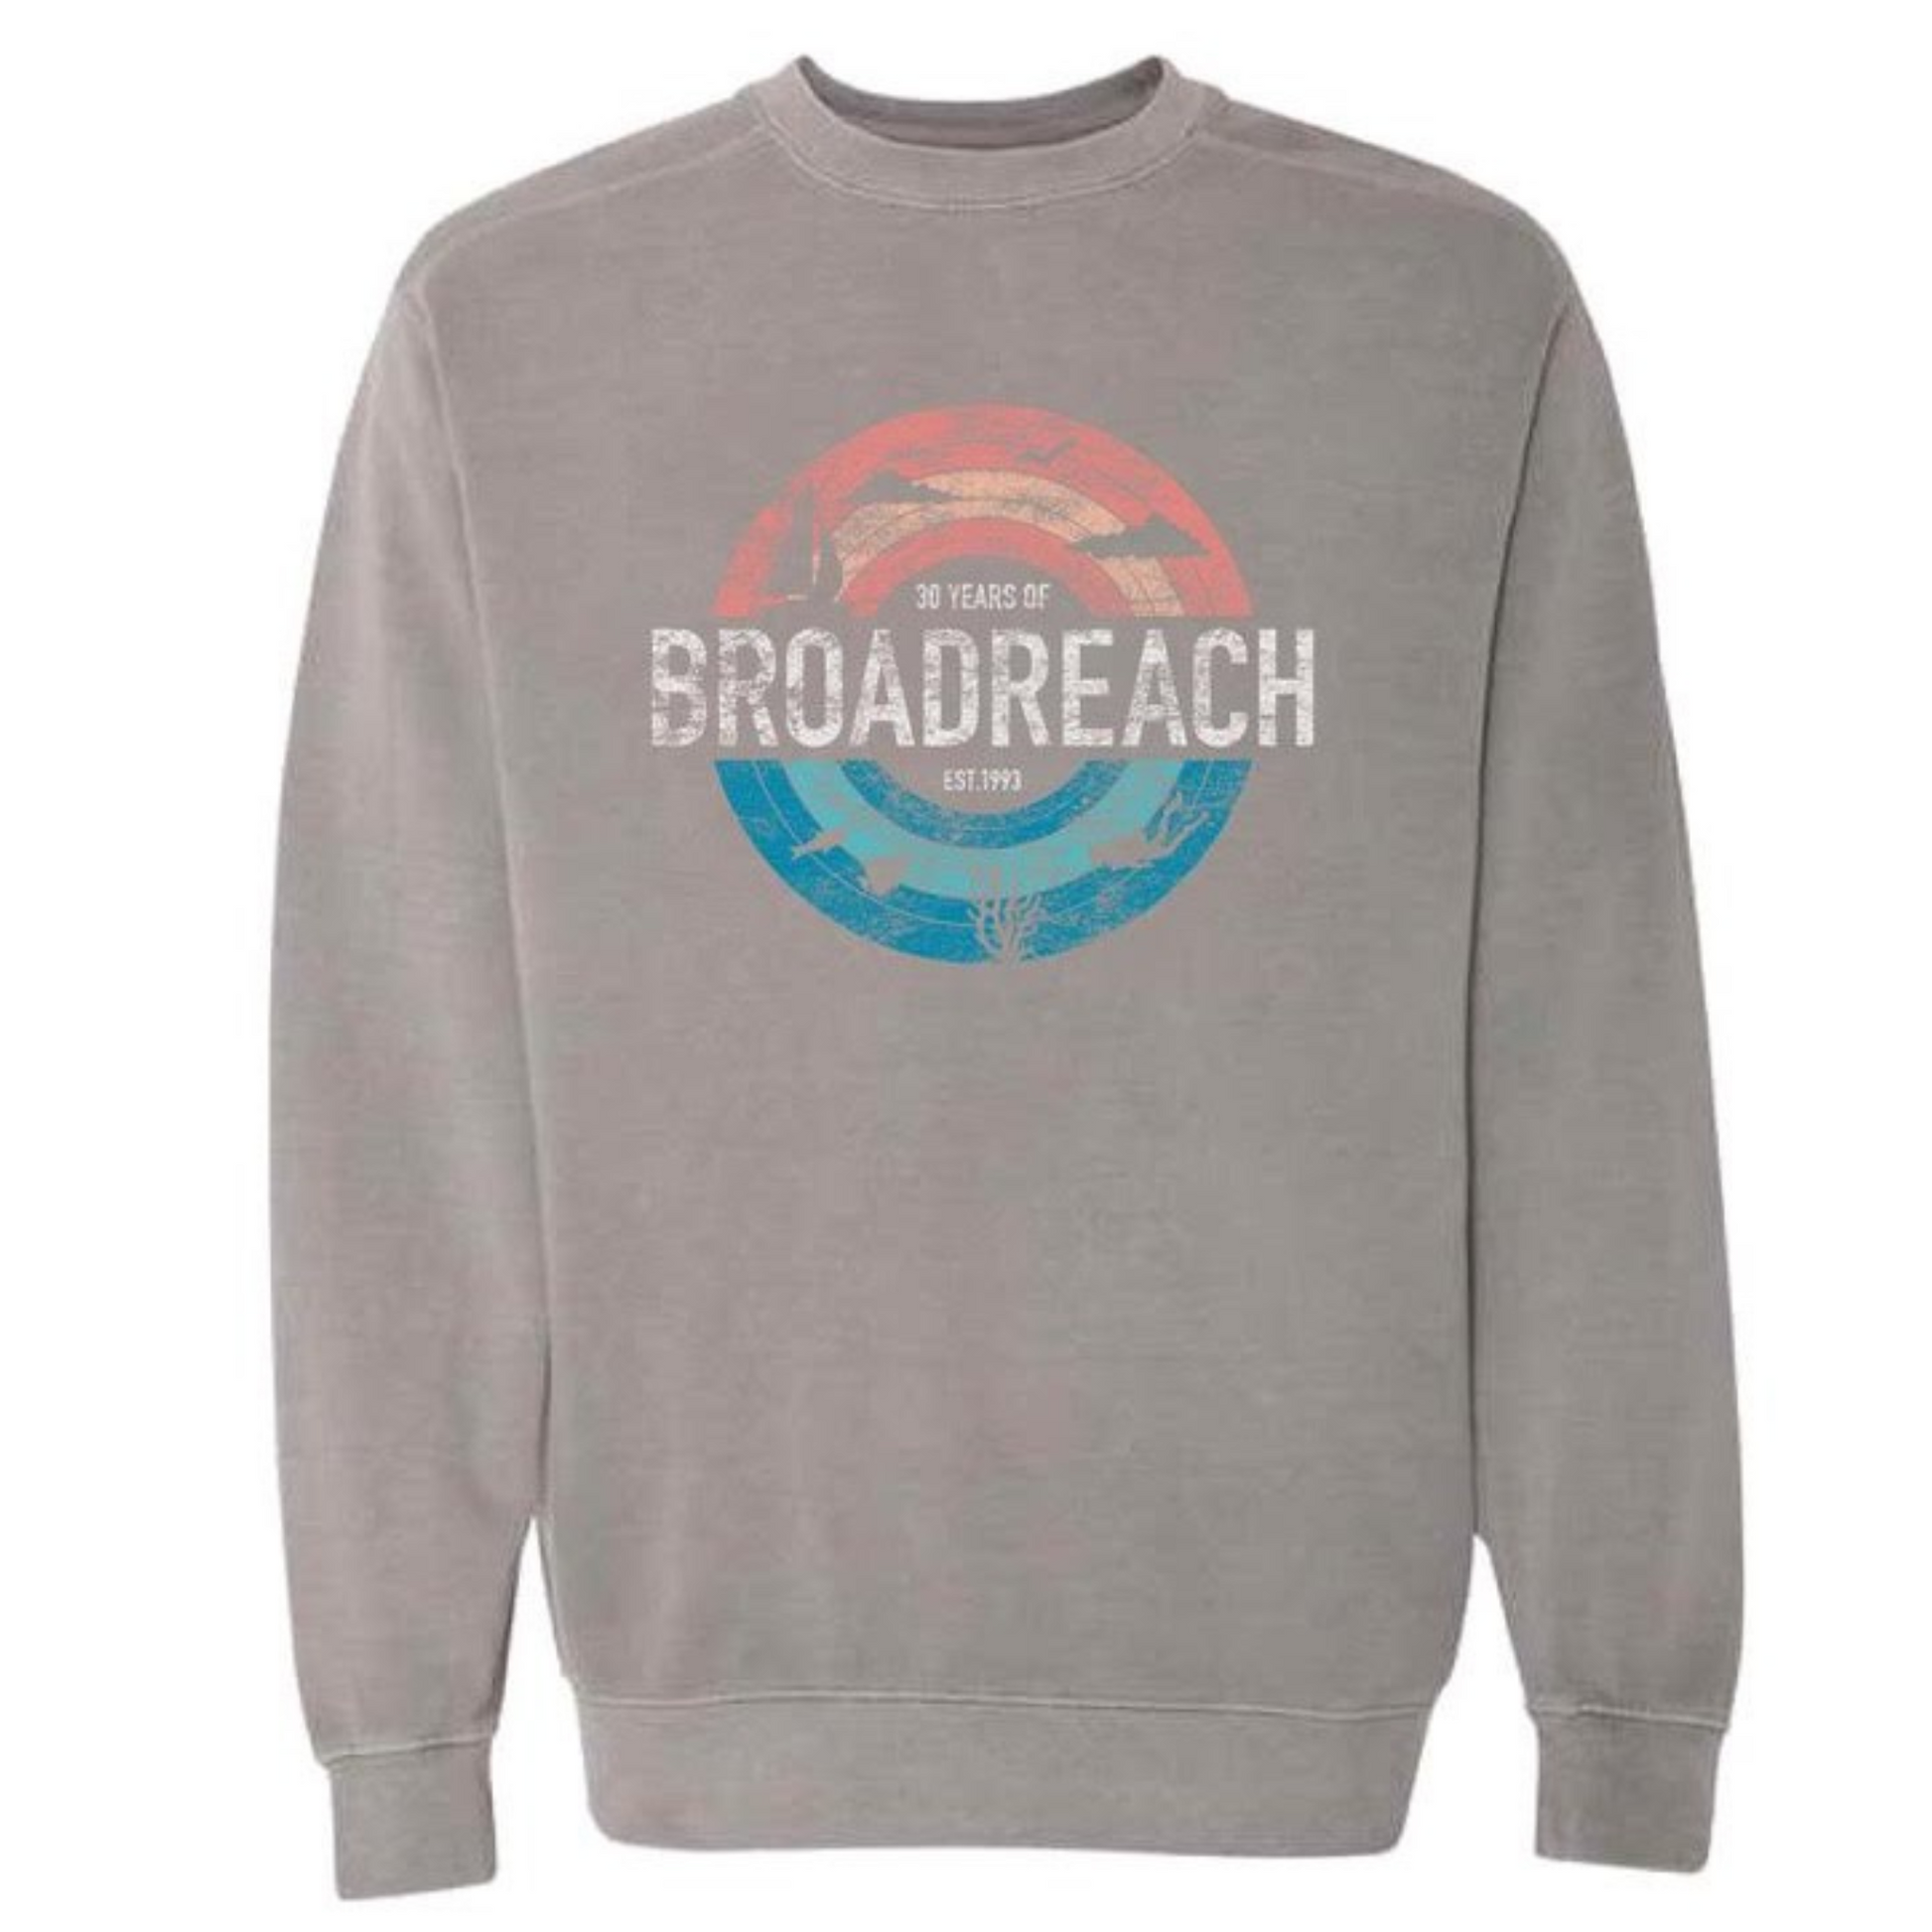 grey crewneck sweatshirt reading 30 years of Broadreach